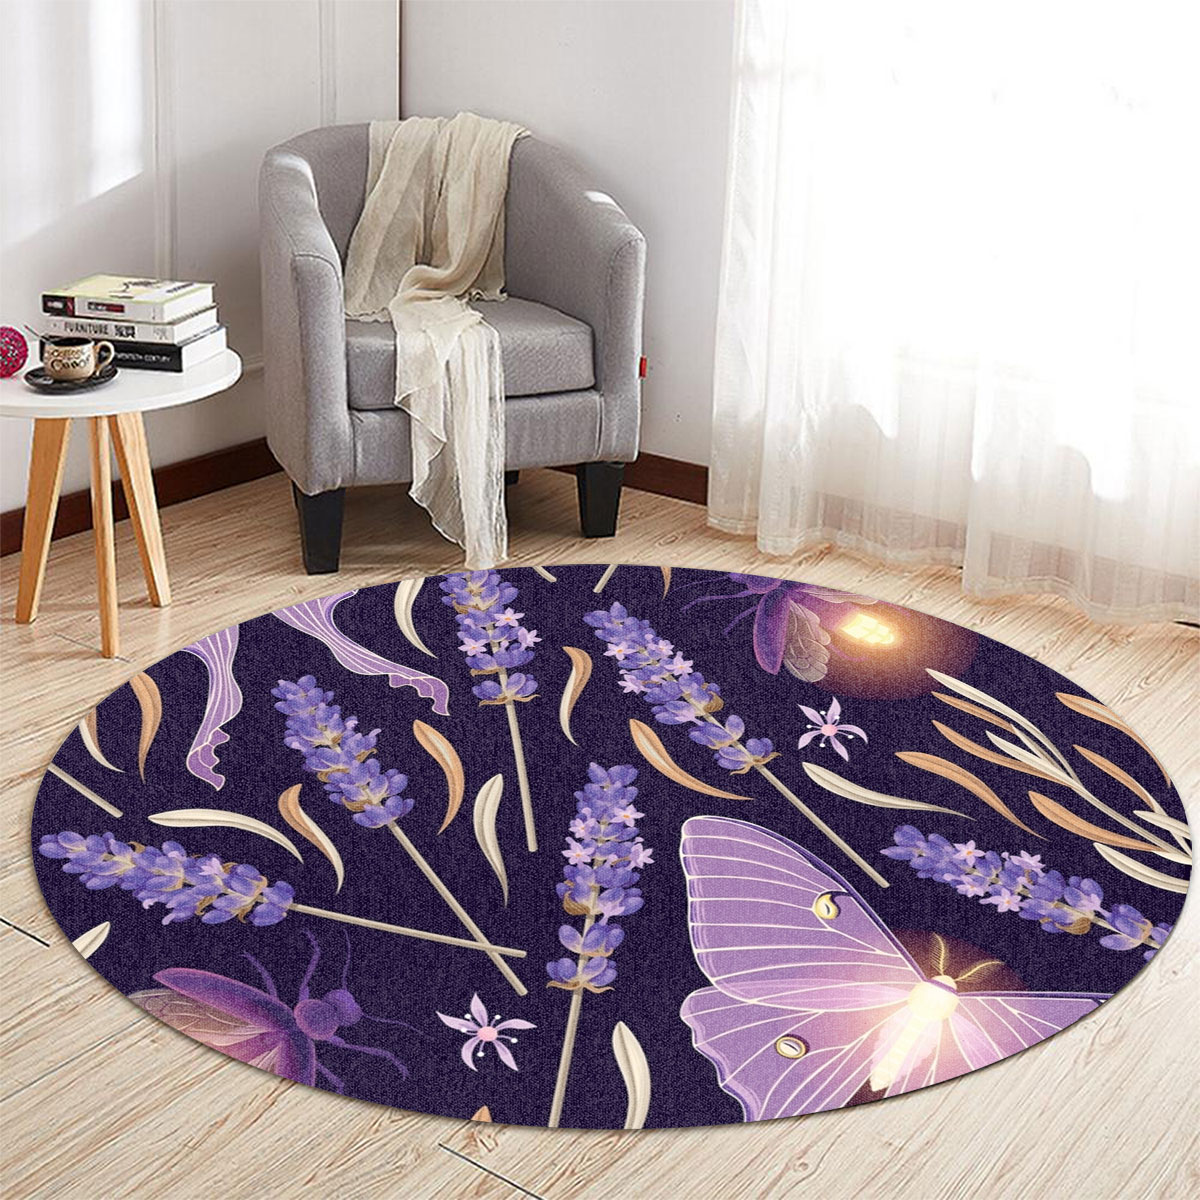 Fairy Fireflies Round Carpet